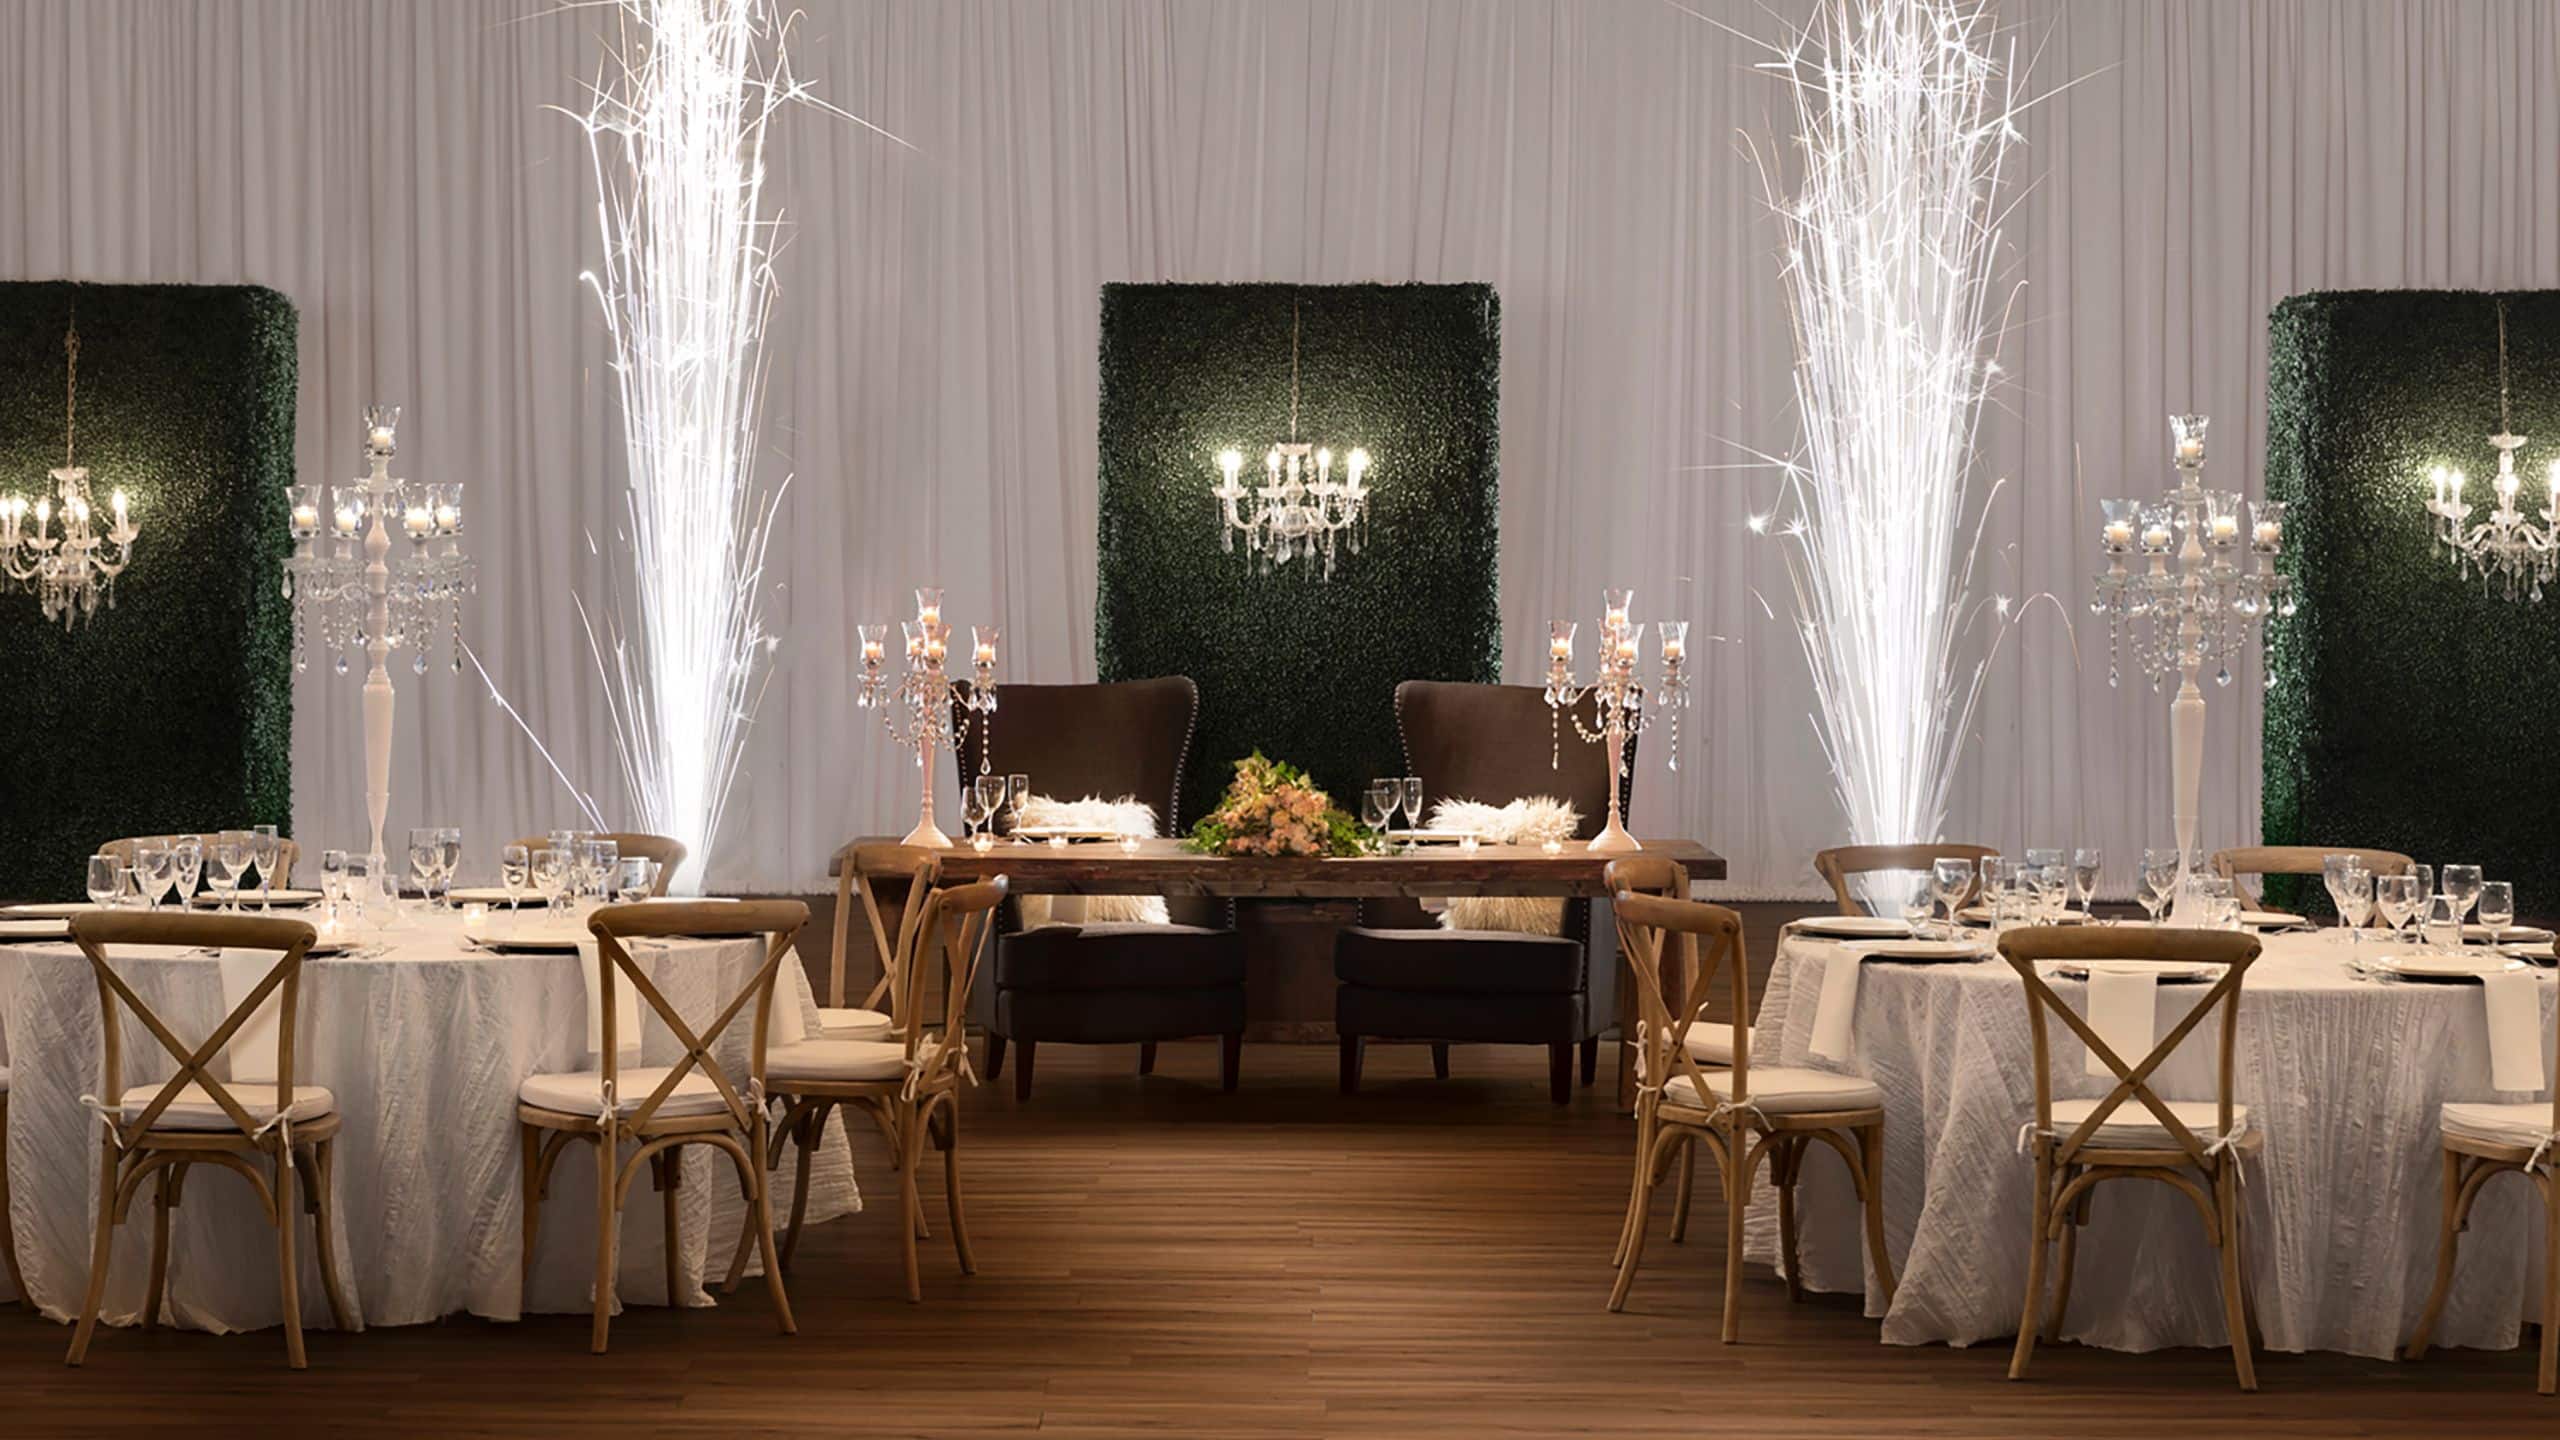 Hyatt Regency Hill Country Resort and Spa Pavilion Wedding Reception Tables Fireworks